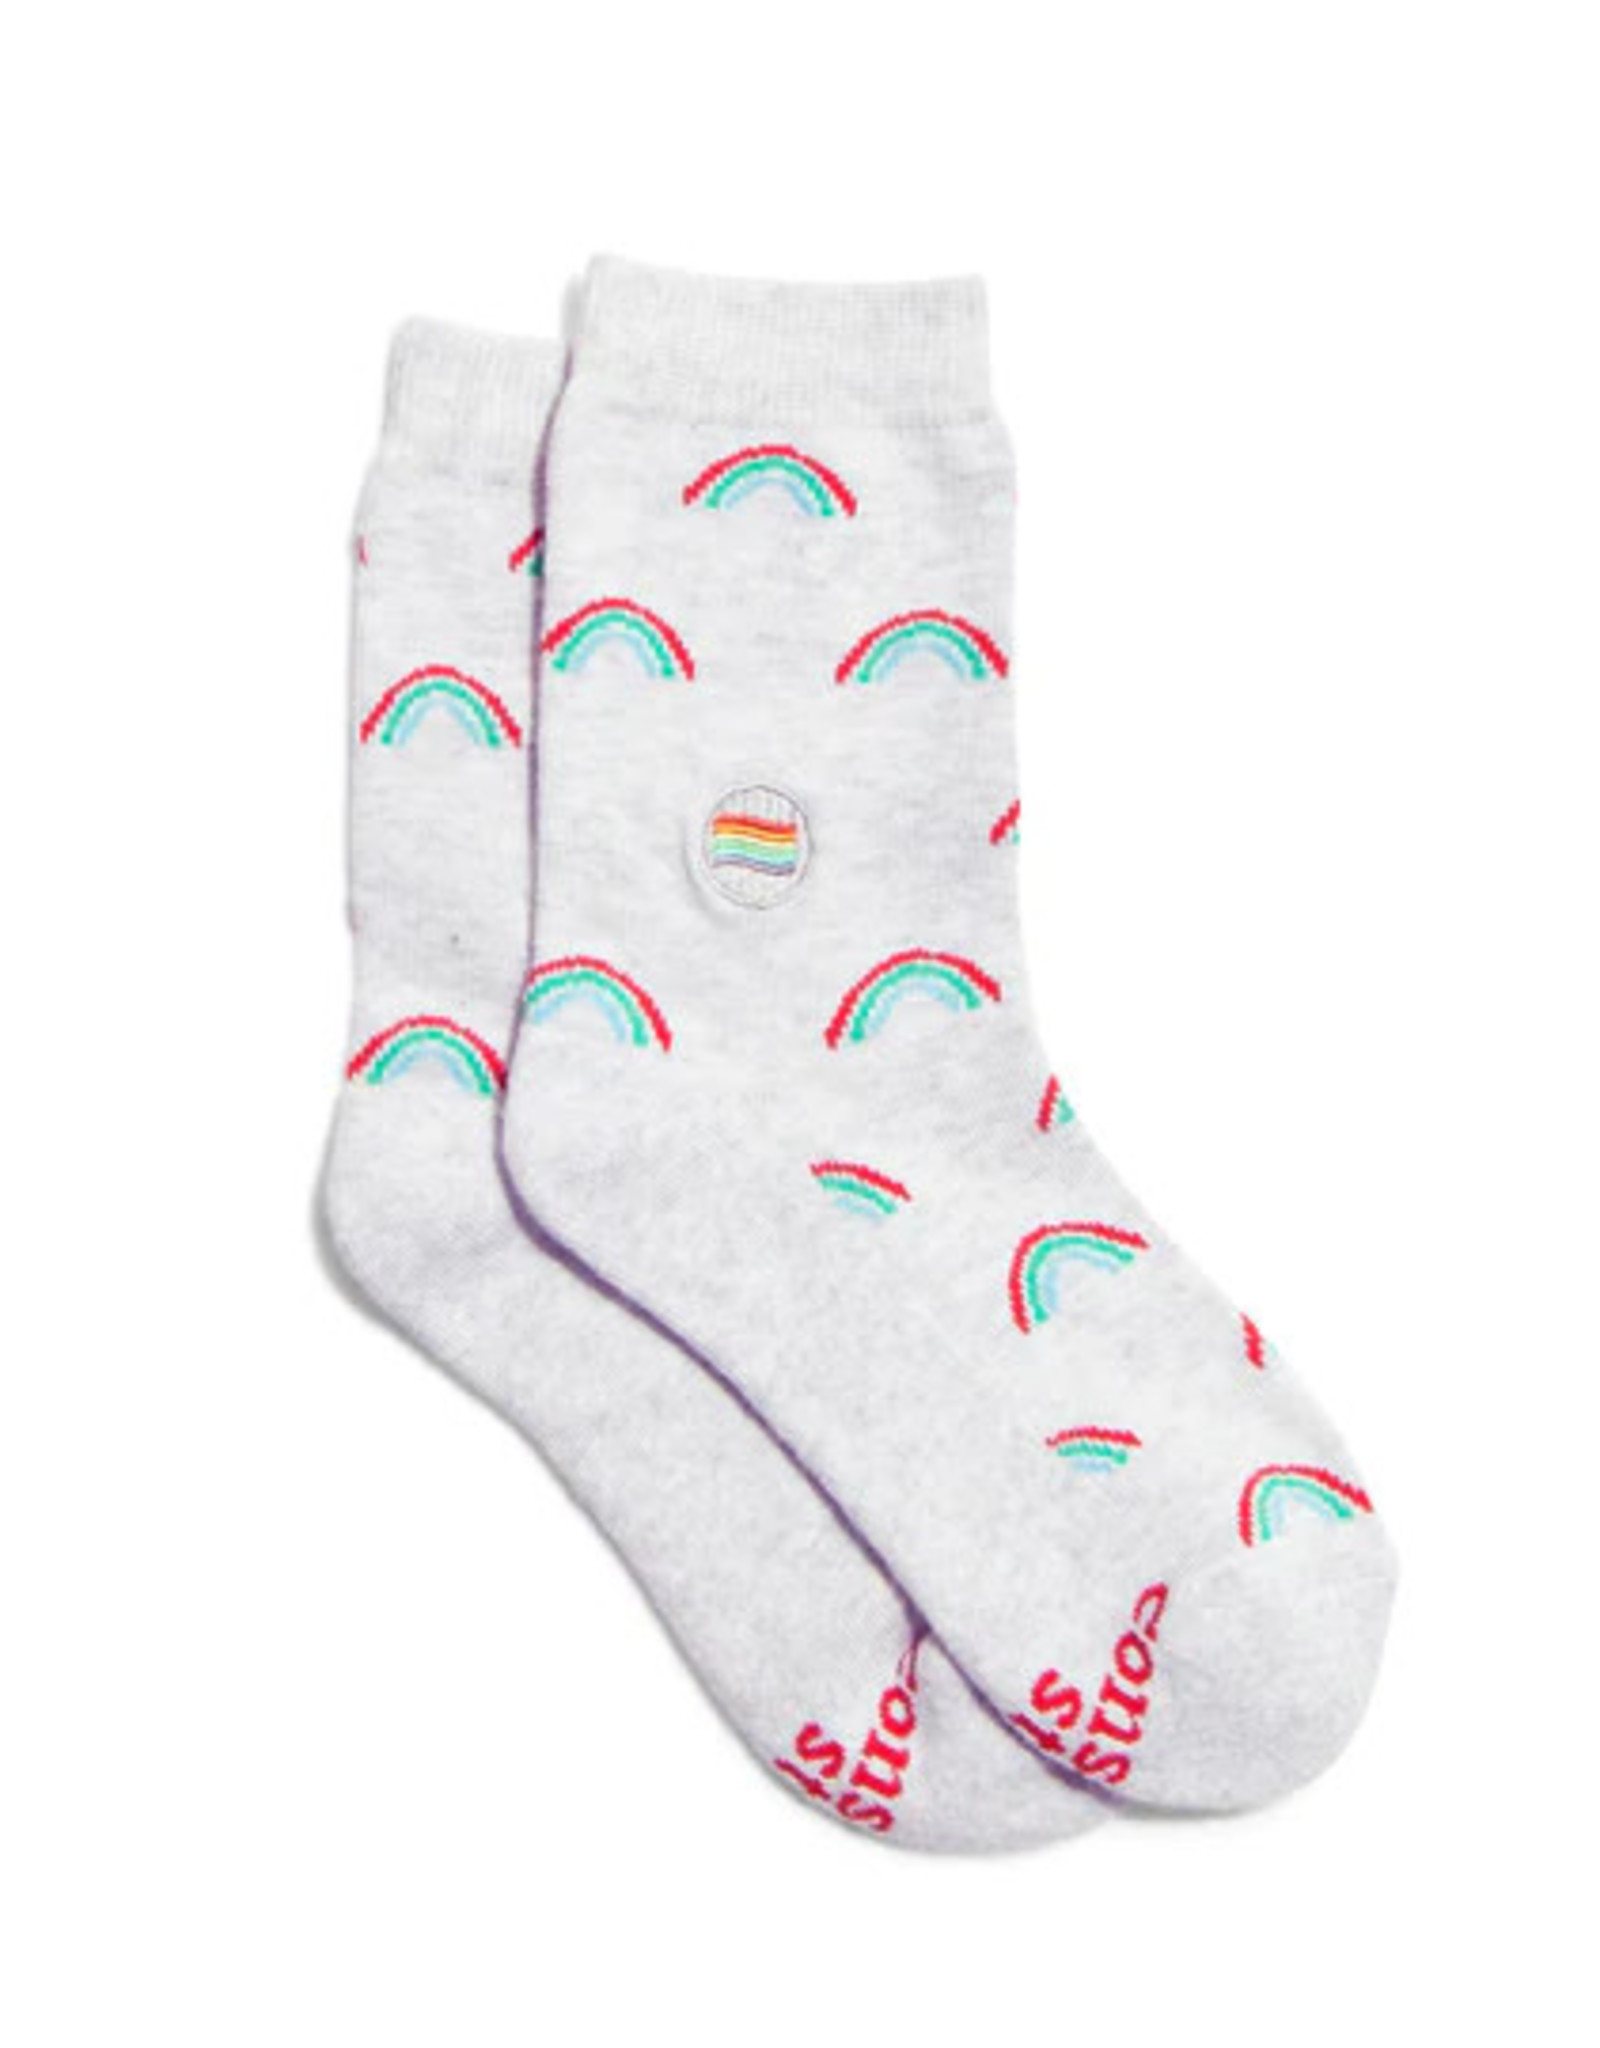 Conscious Step Kids Socks that Save LGBTQ Lives (Rainbows)